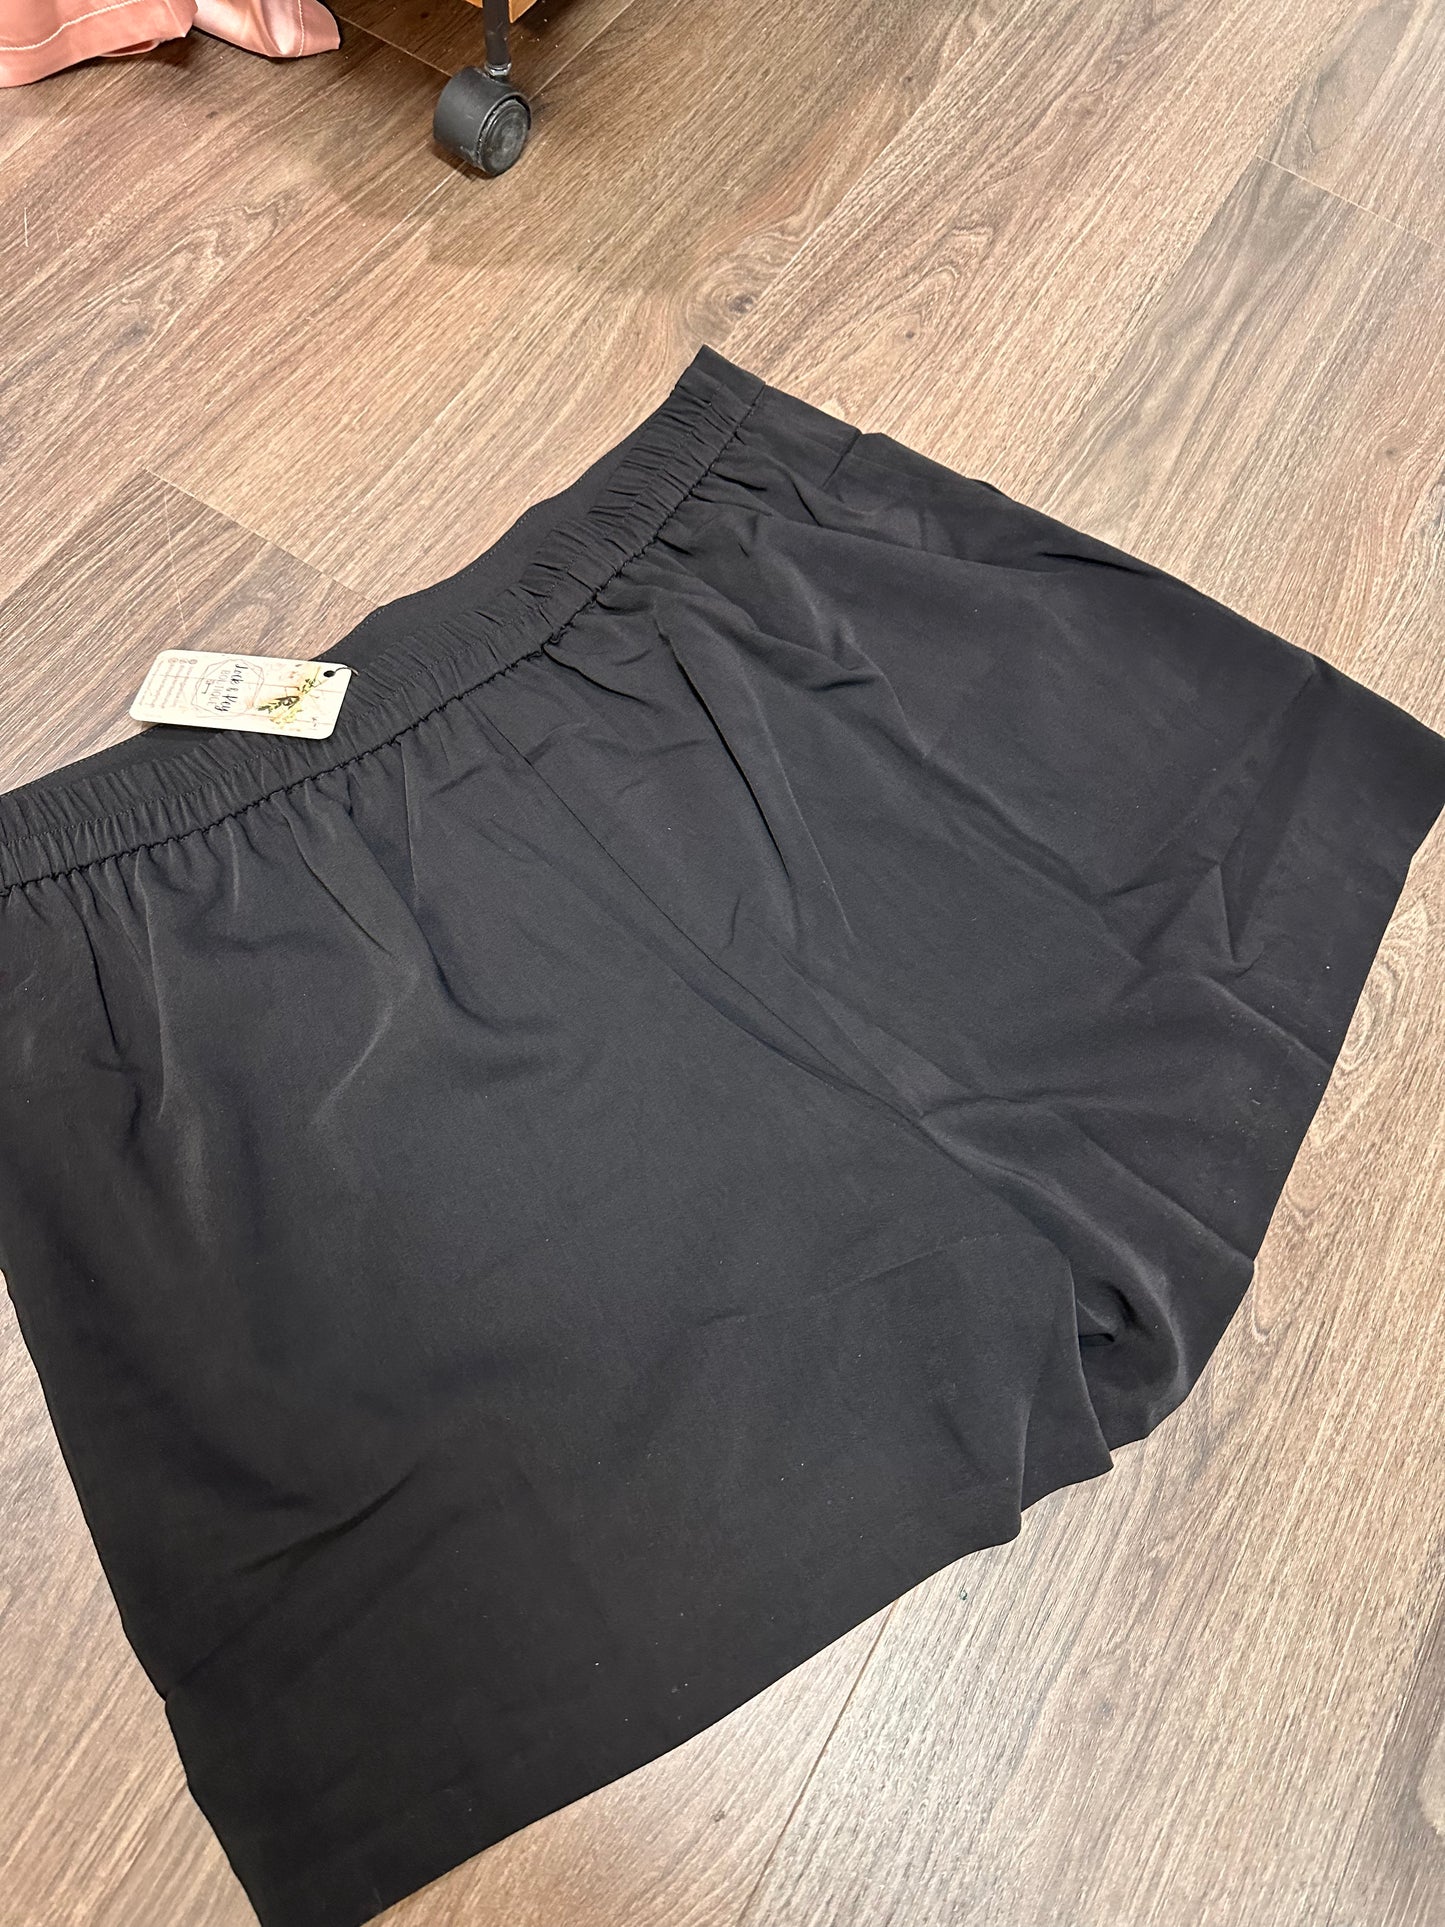 CURVY - Black Dress Shorts